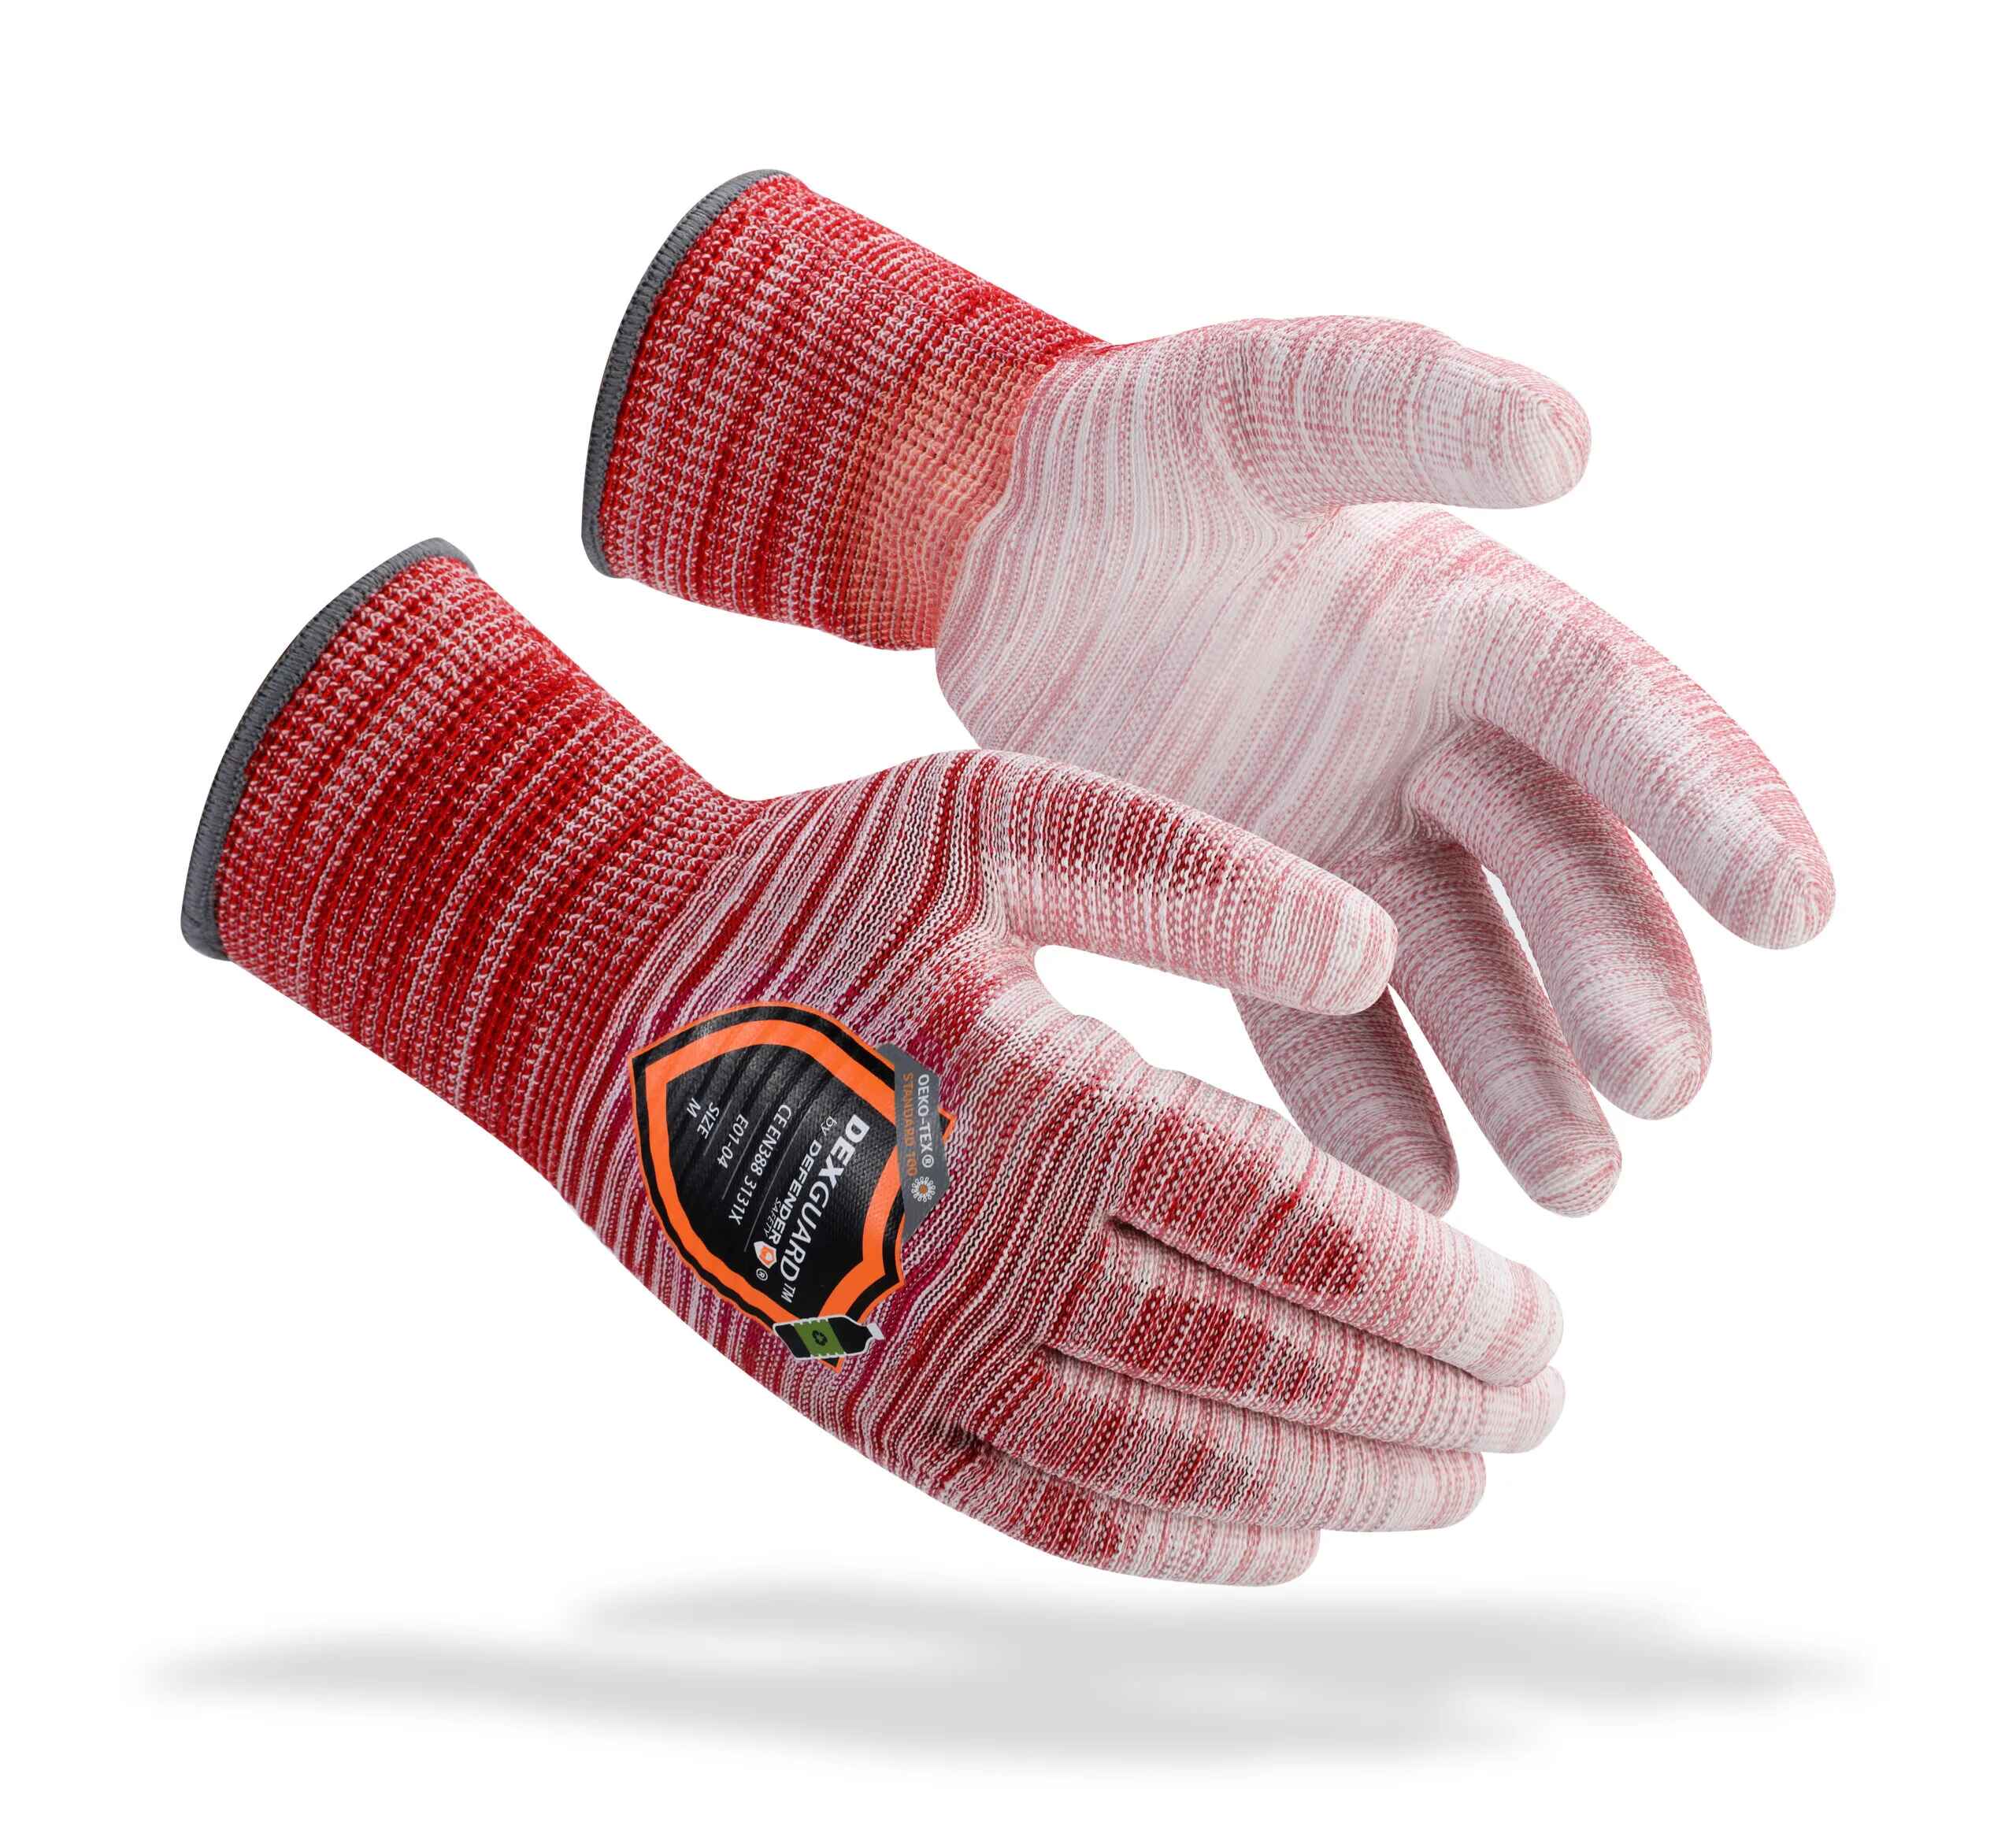 1 Pair Wood Carving Gloves Anti-Slip Wear Resisting Durable Anti